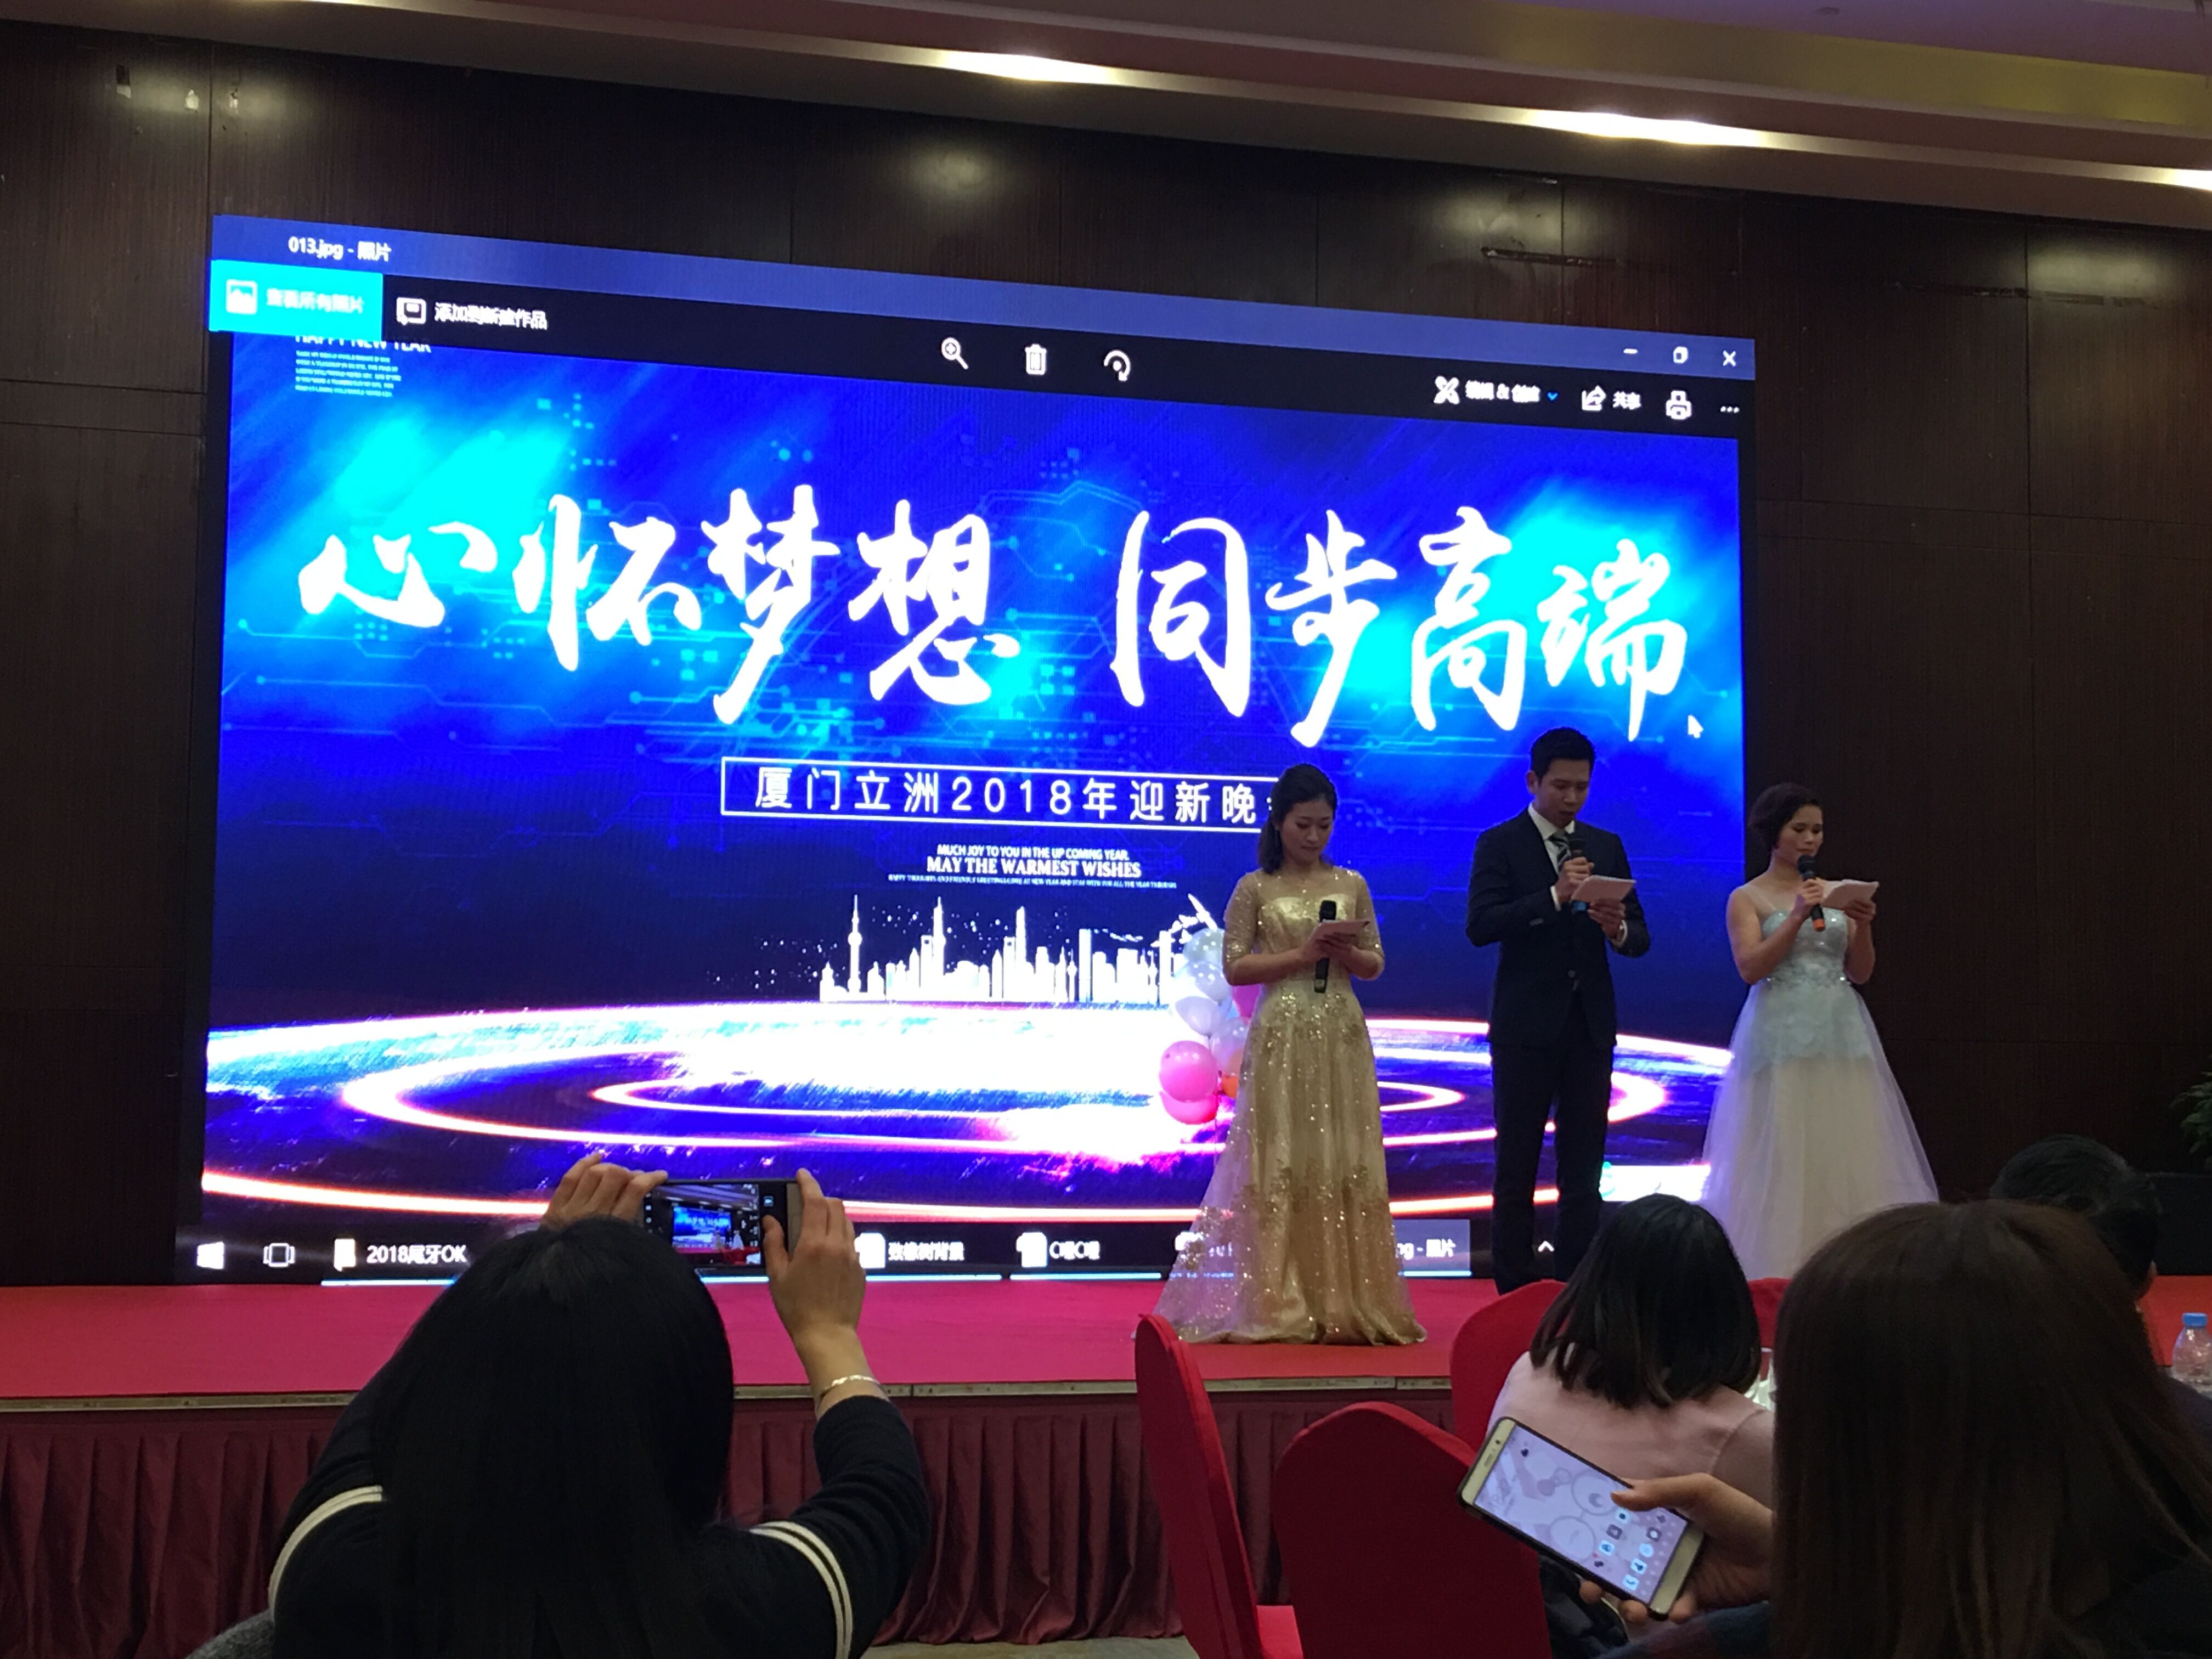 Xiamen Lizhou Company New Year Party Was Held